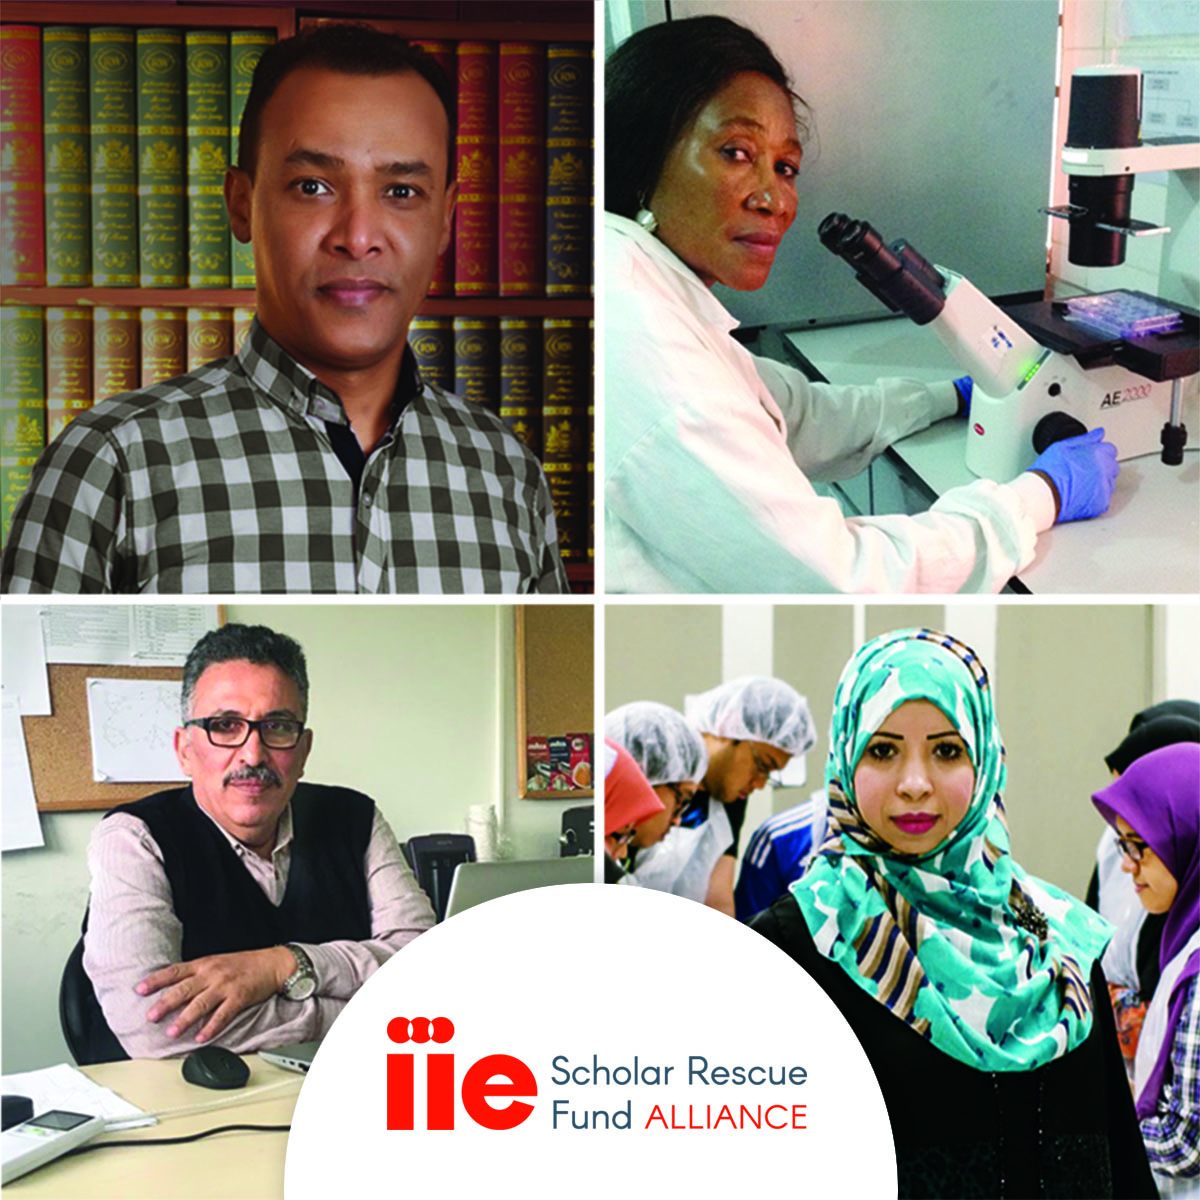 IIE Scholar Rescue Fund Alliance four people working